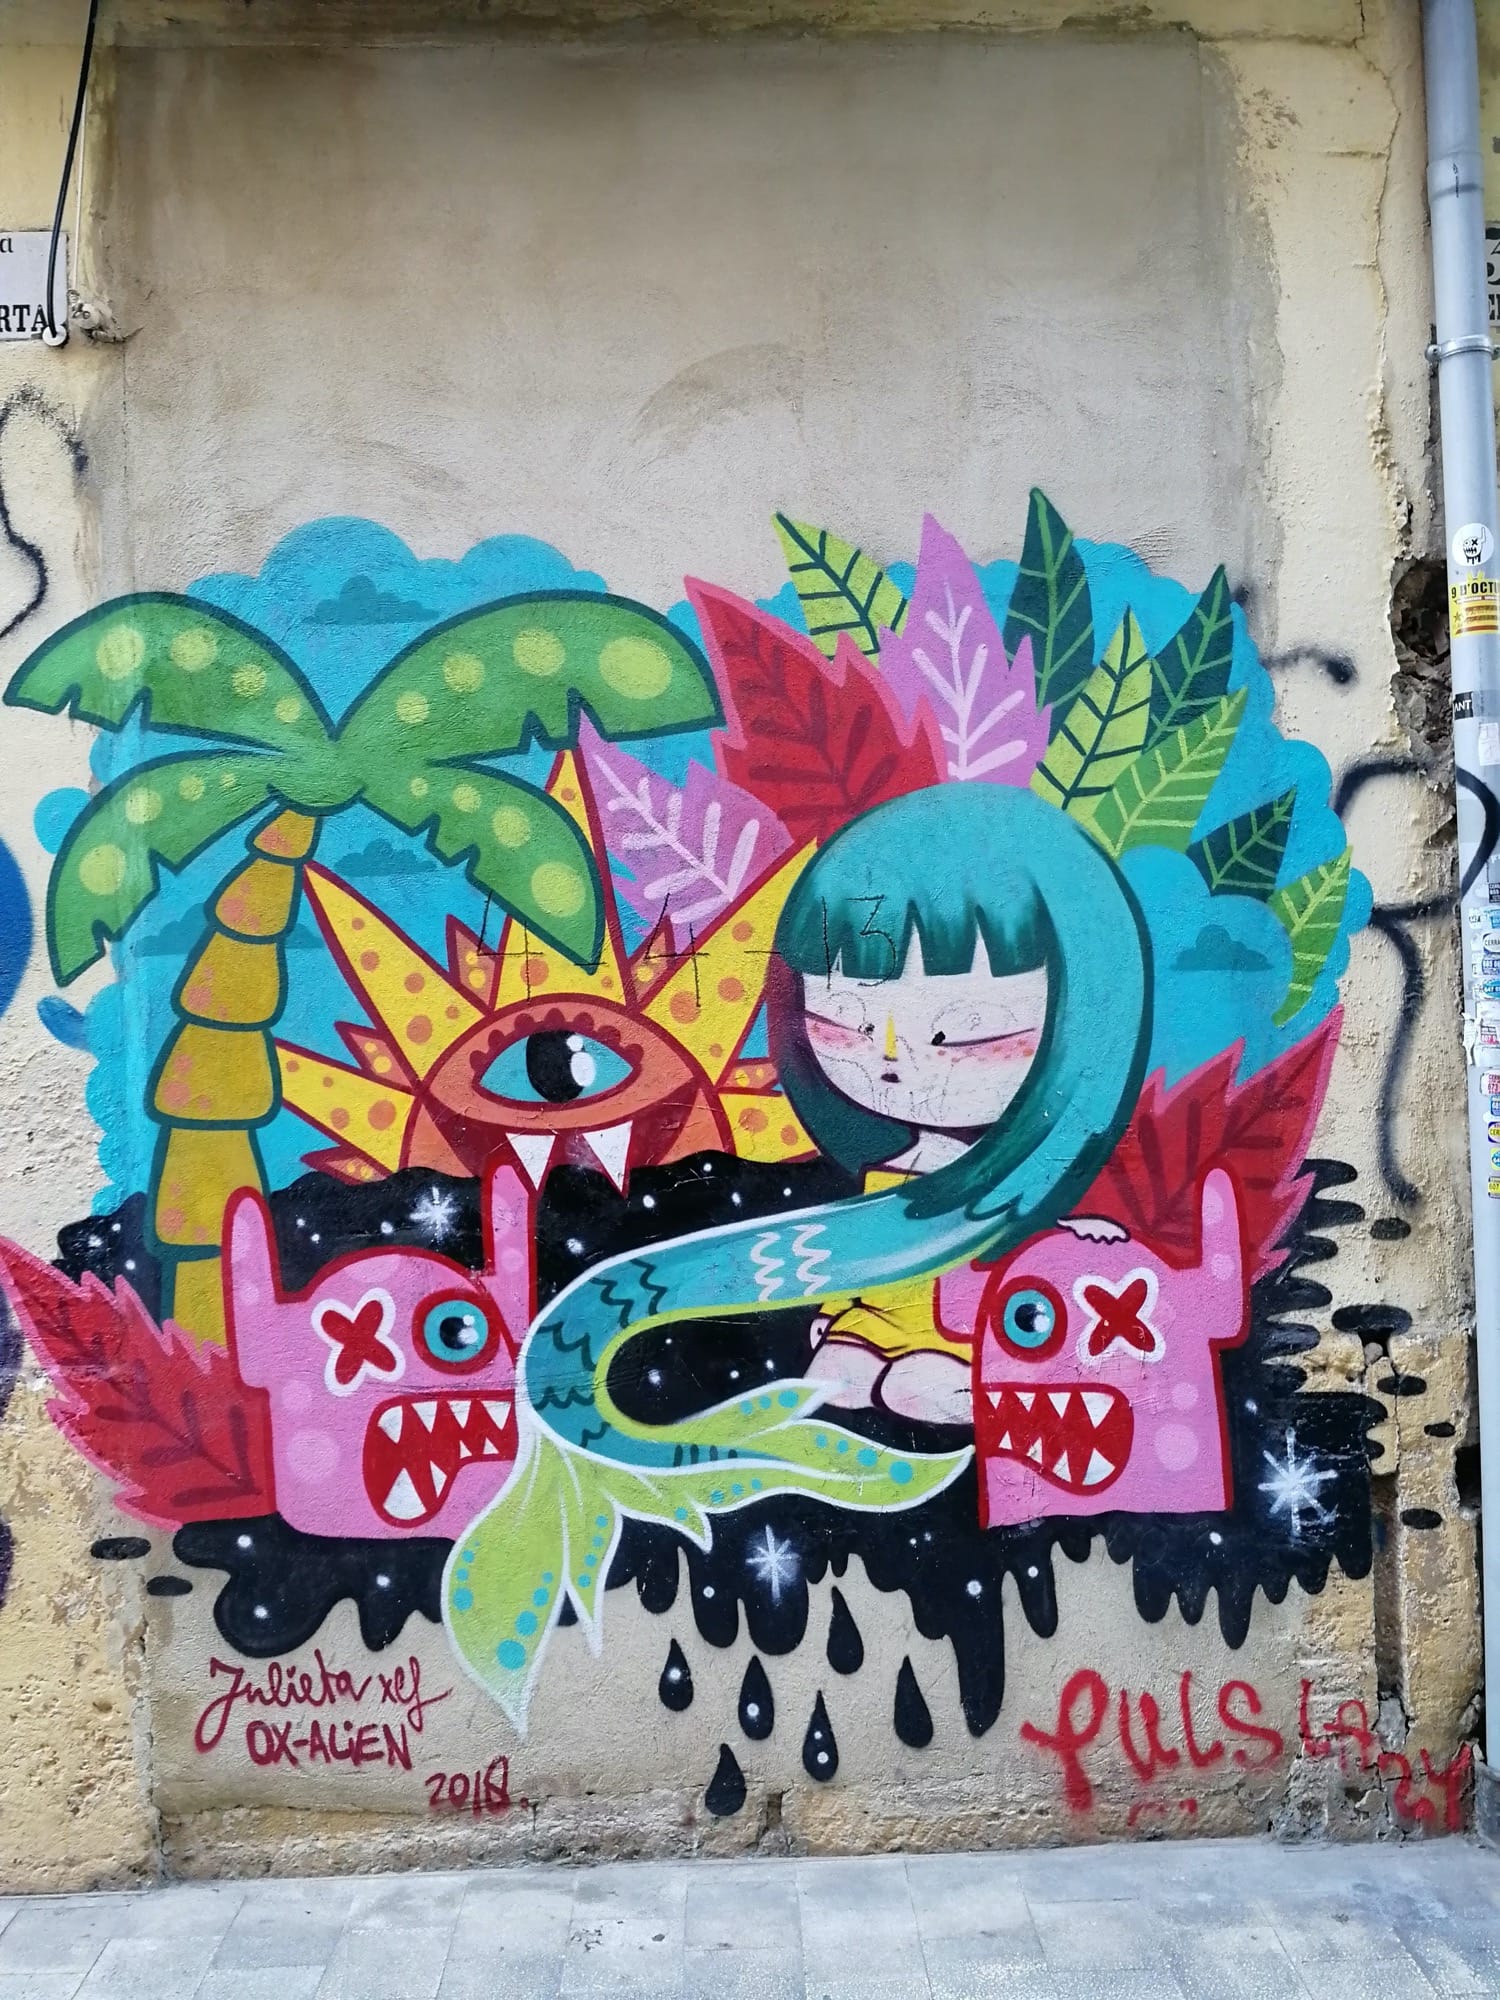 Graffiti 3702  by the artist Julieta xlf captured by Rabot in València Spain